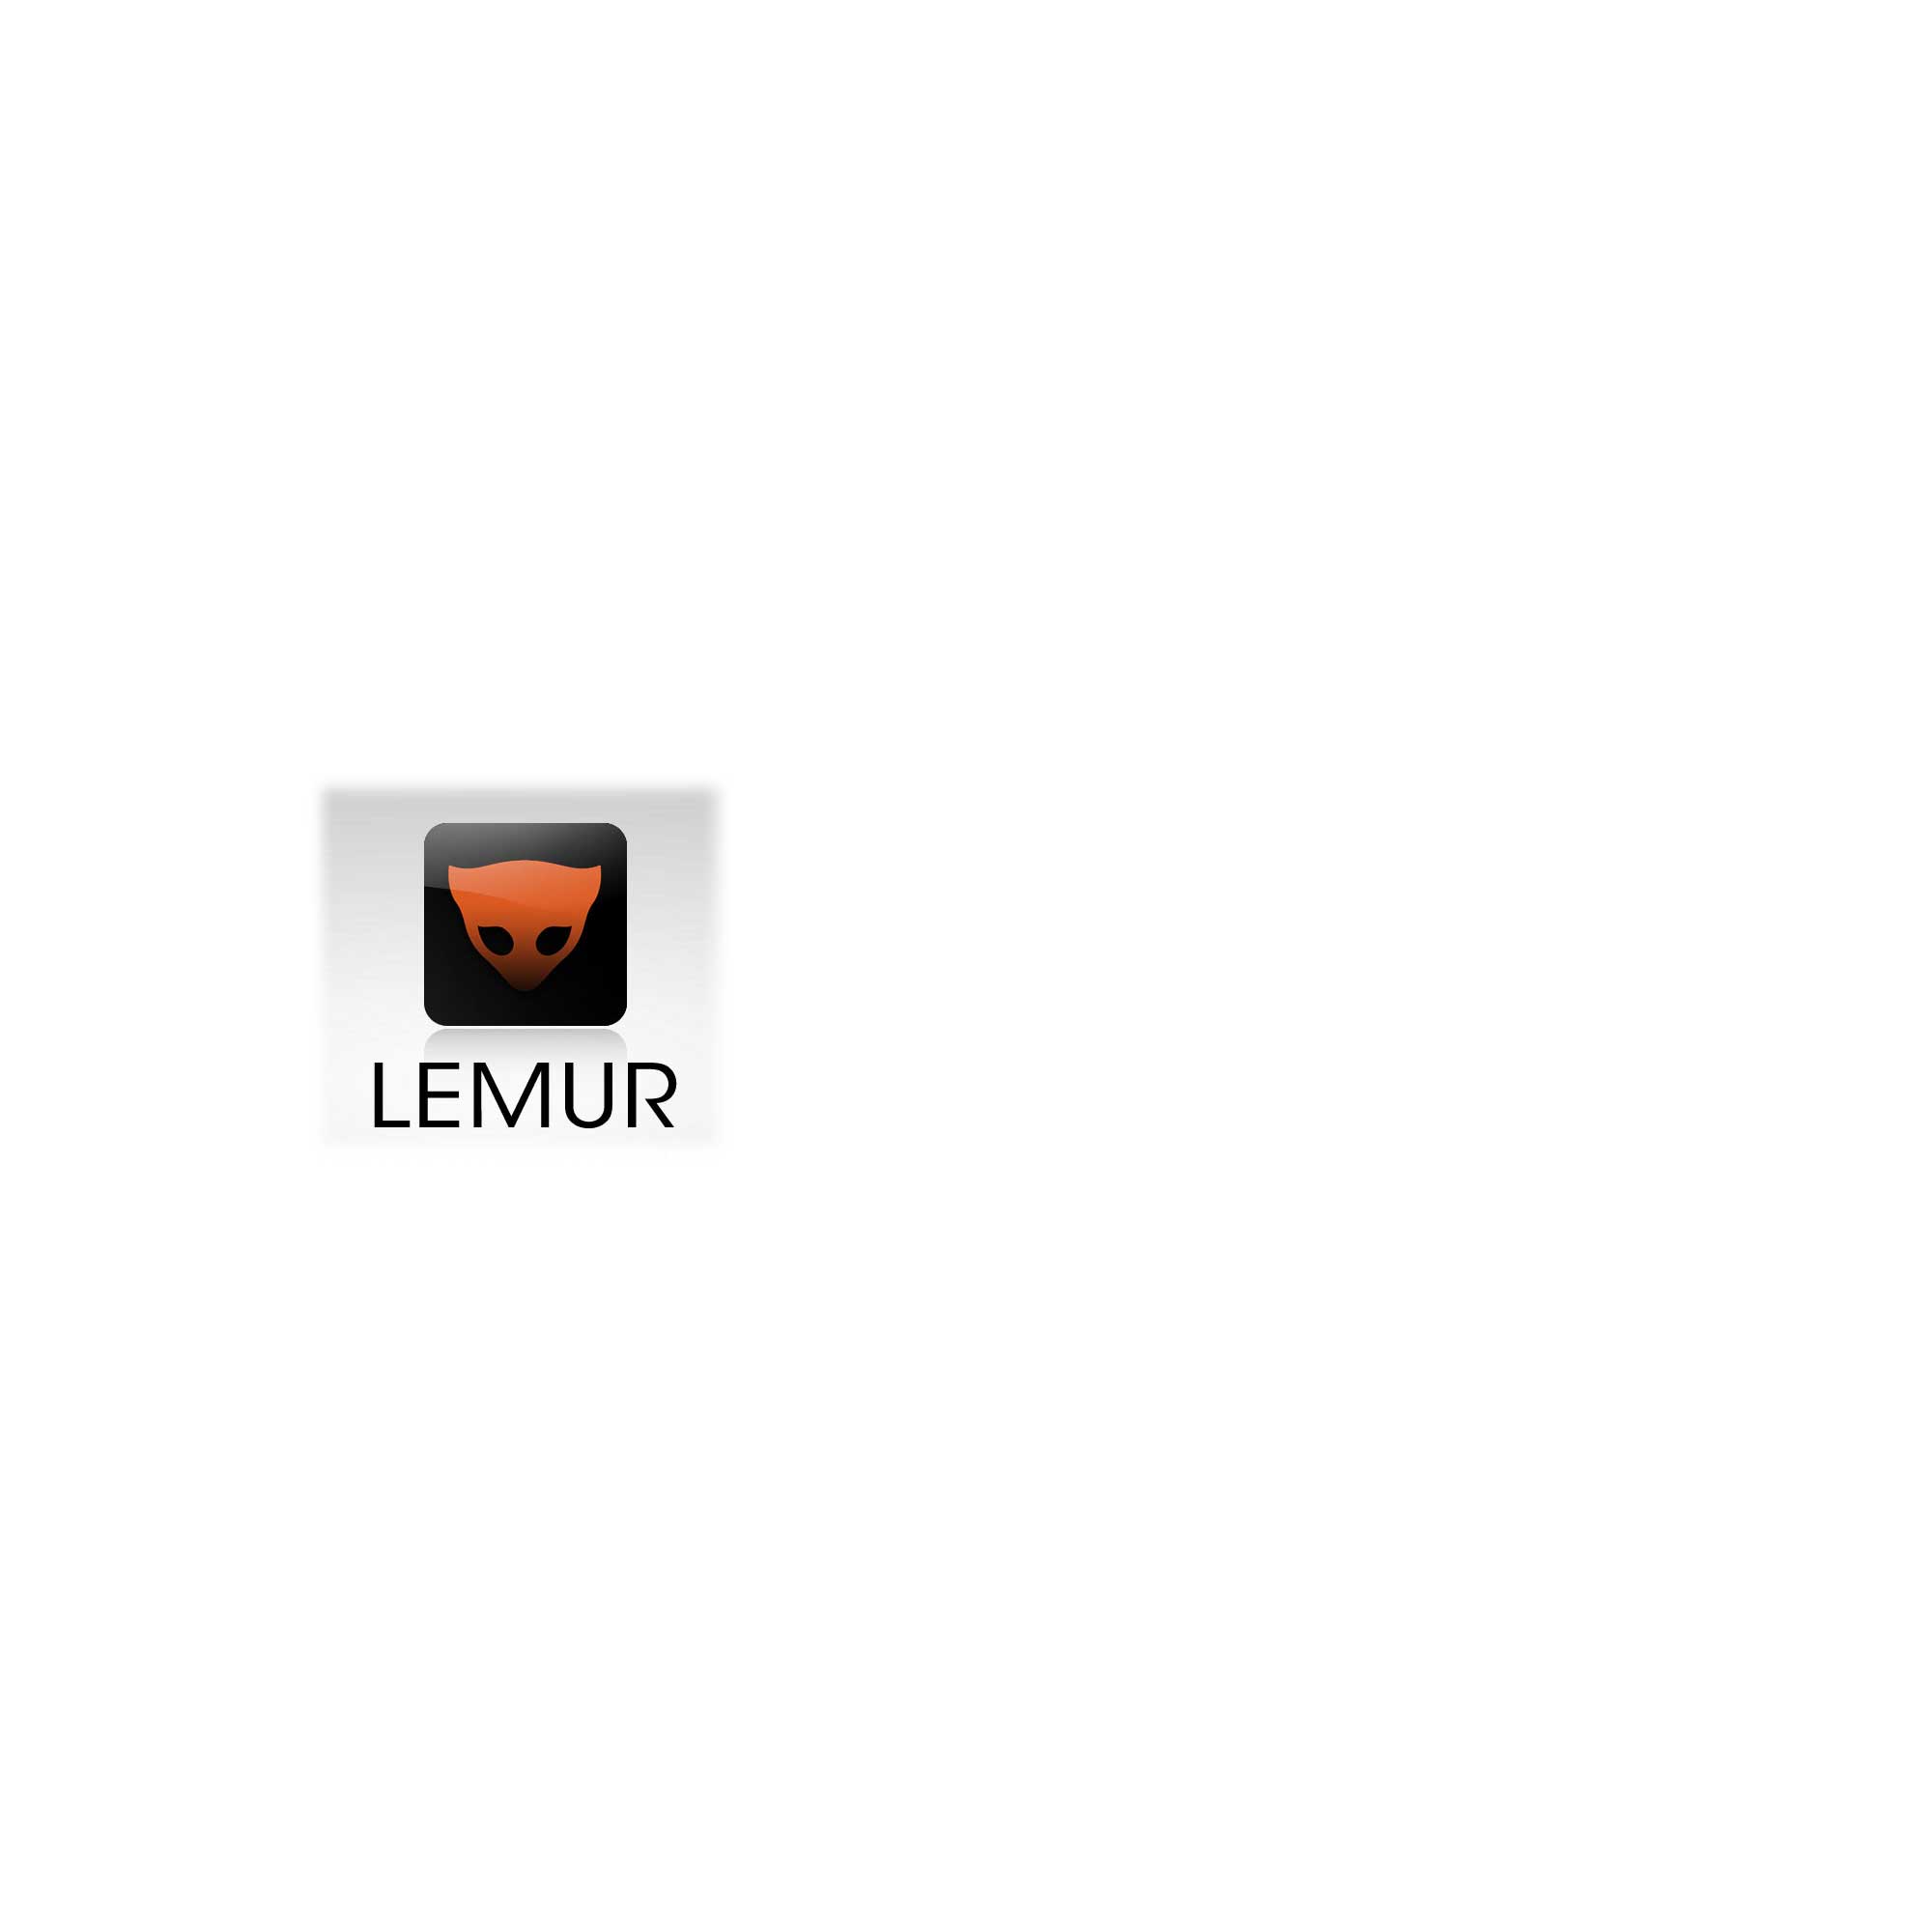 Liine Releases Lemur App For iPad & iPhone